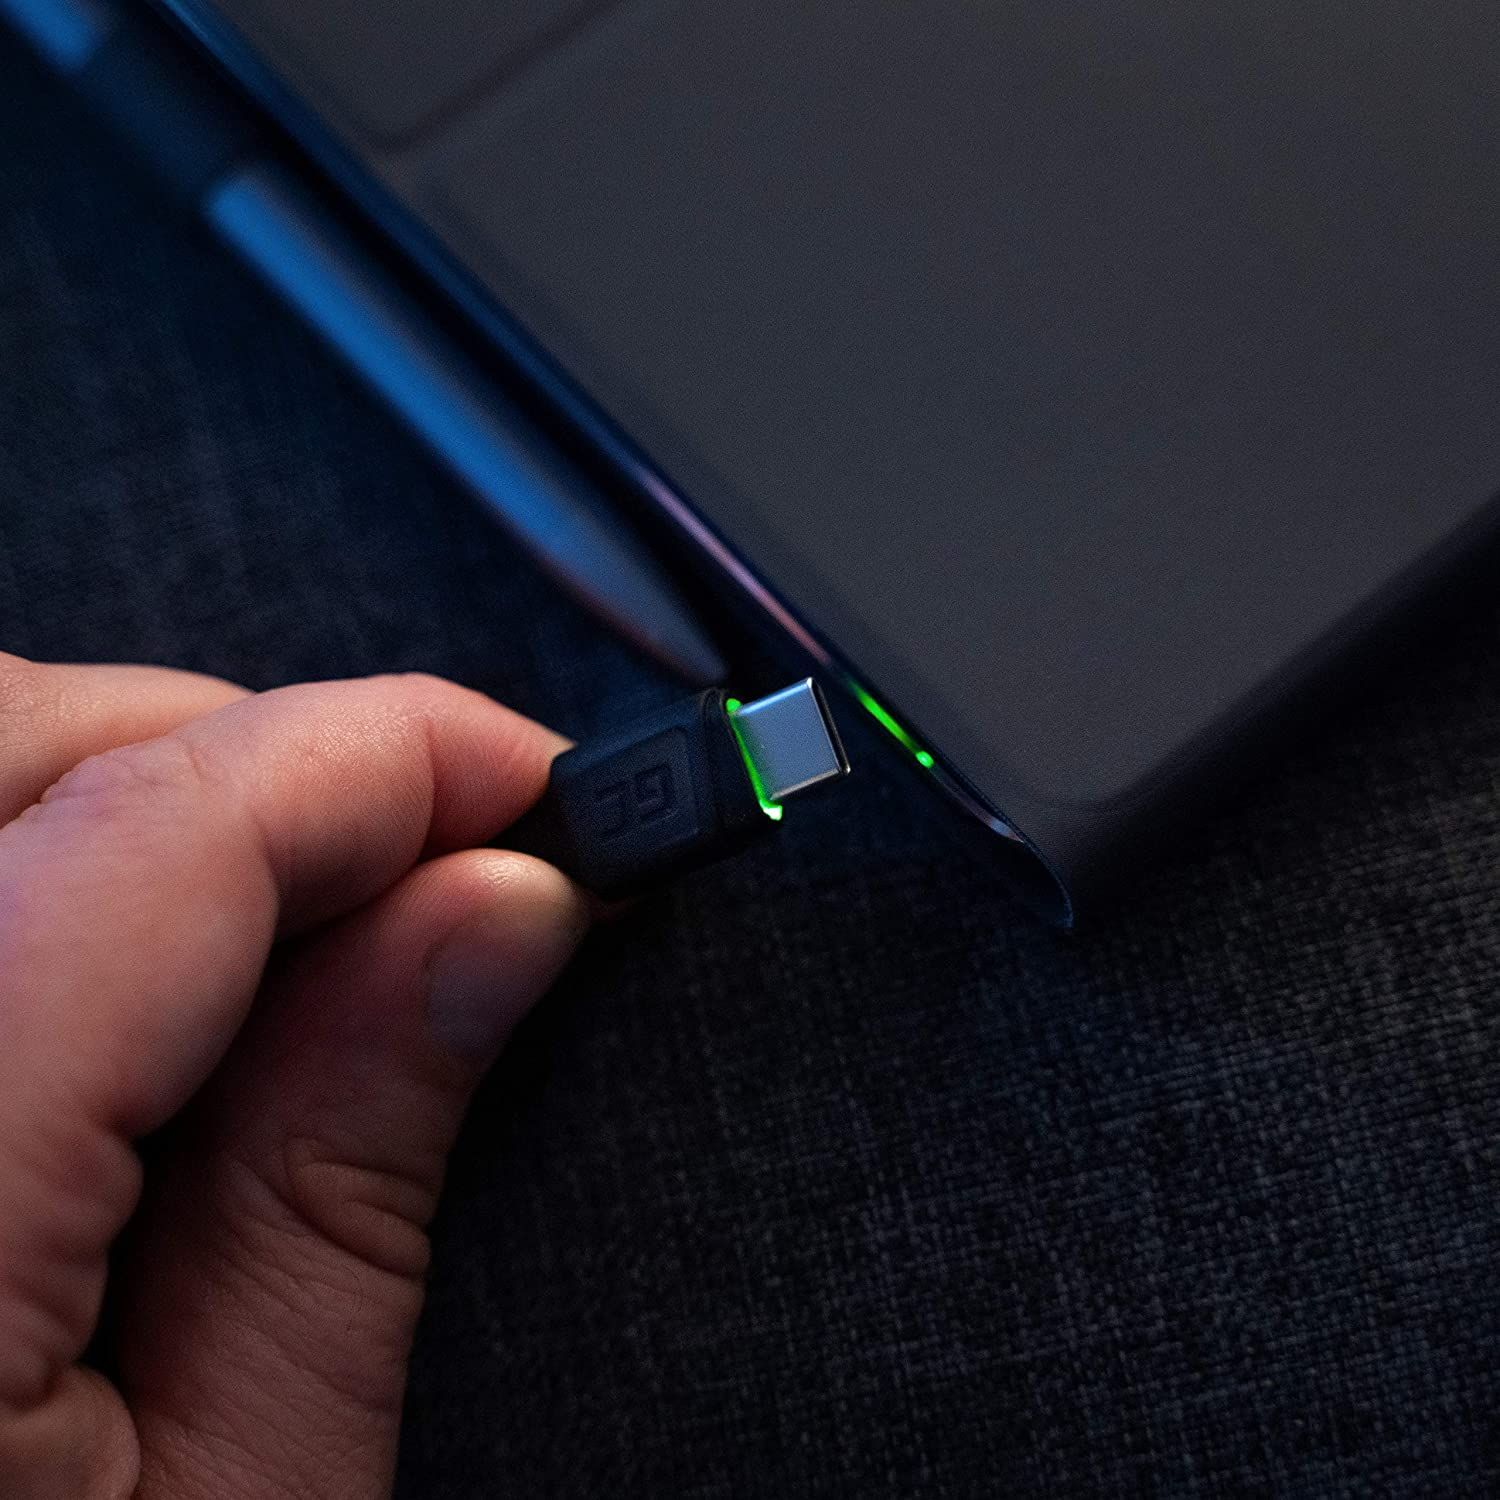 GREEN CELL Grüne Kabel und USB-C (PC), USB-A Kabel LED - schwarz Adapter Zubehör